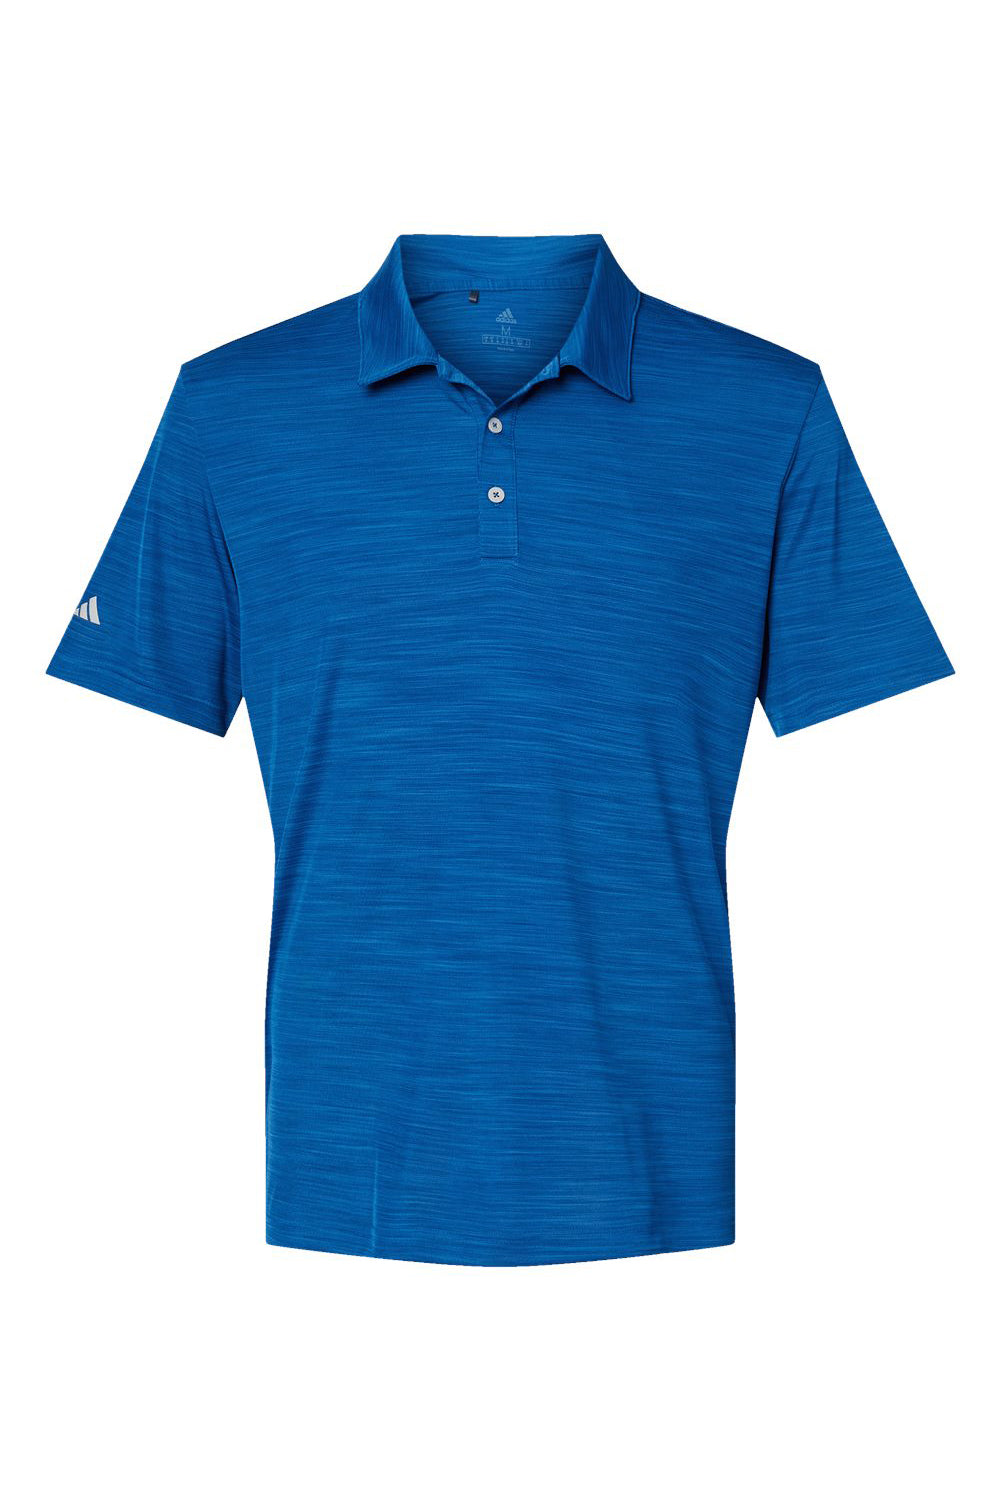 Adidas A402 Mens Melange Short Sleeve Polo Shirt Collegiate Royal Blue Melange Flat Front